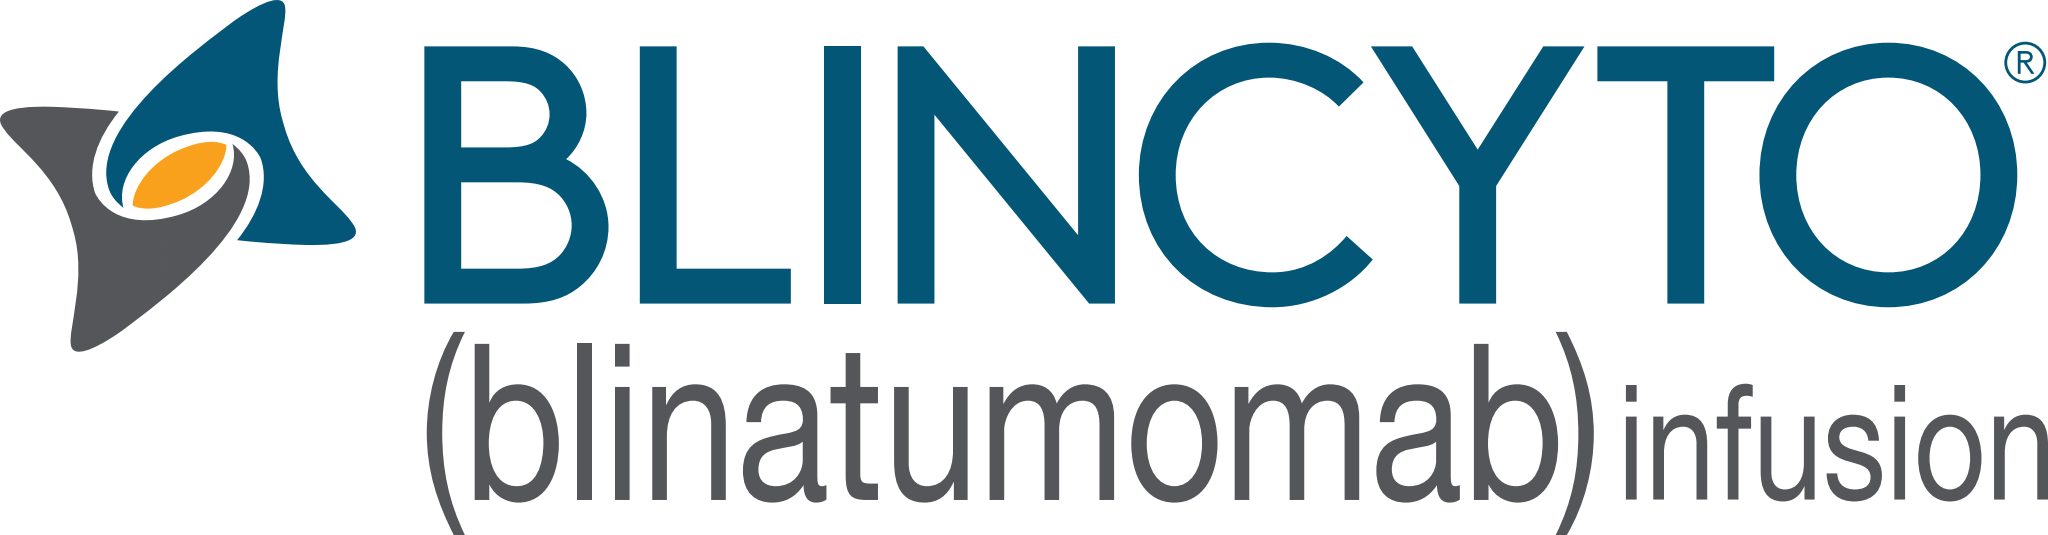 Blinc logo